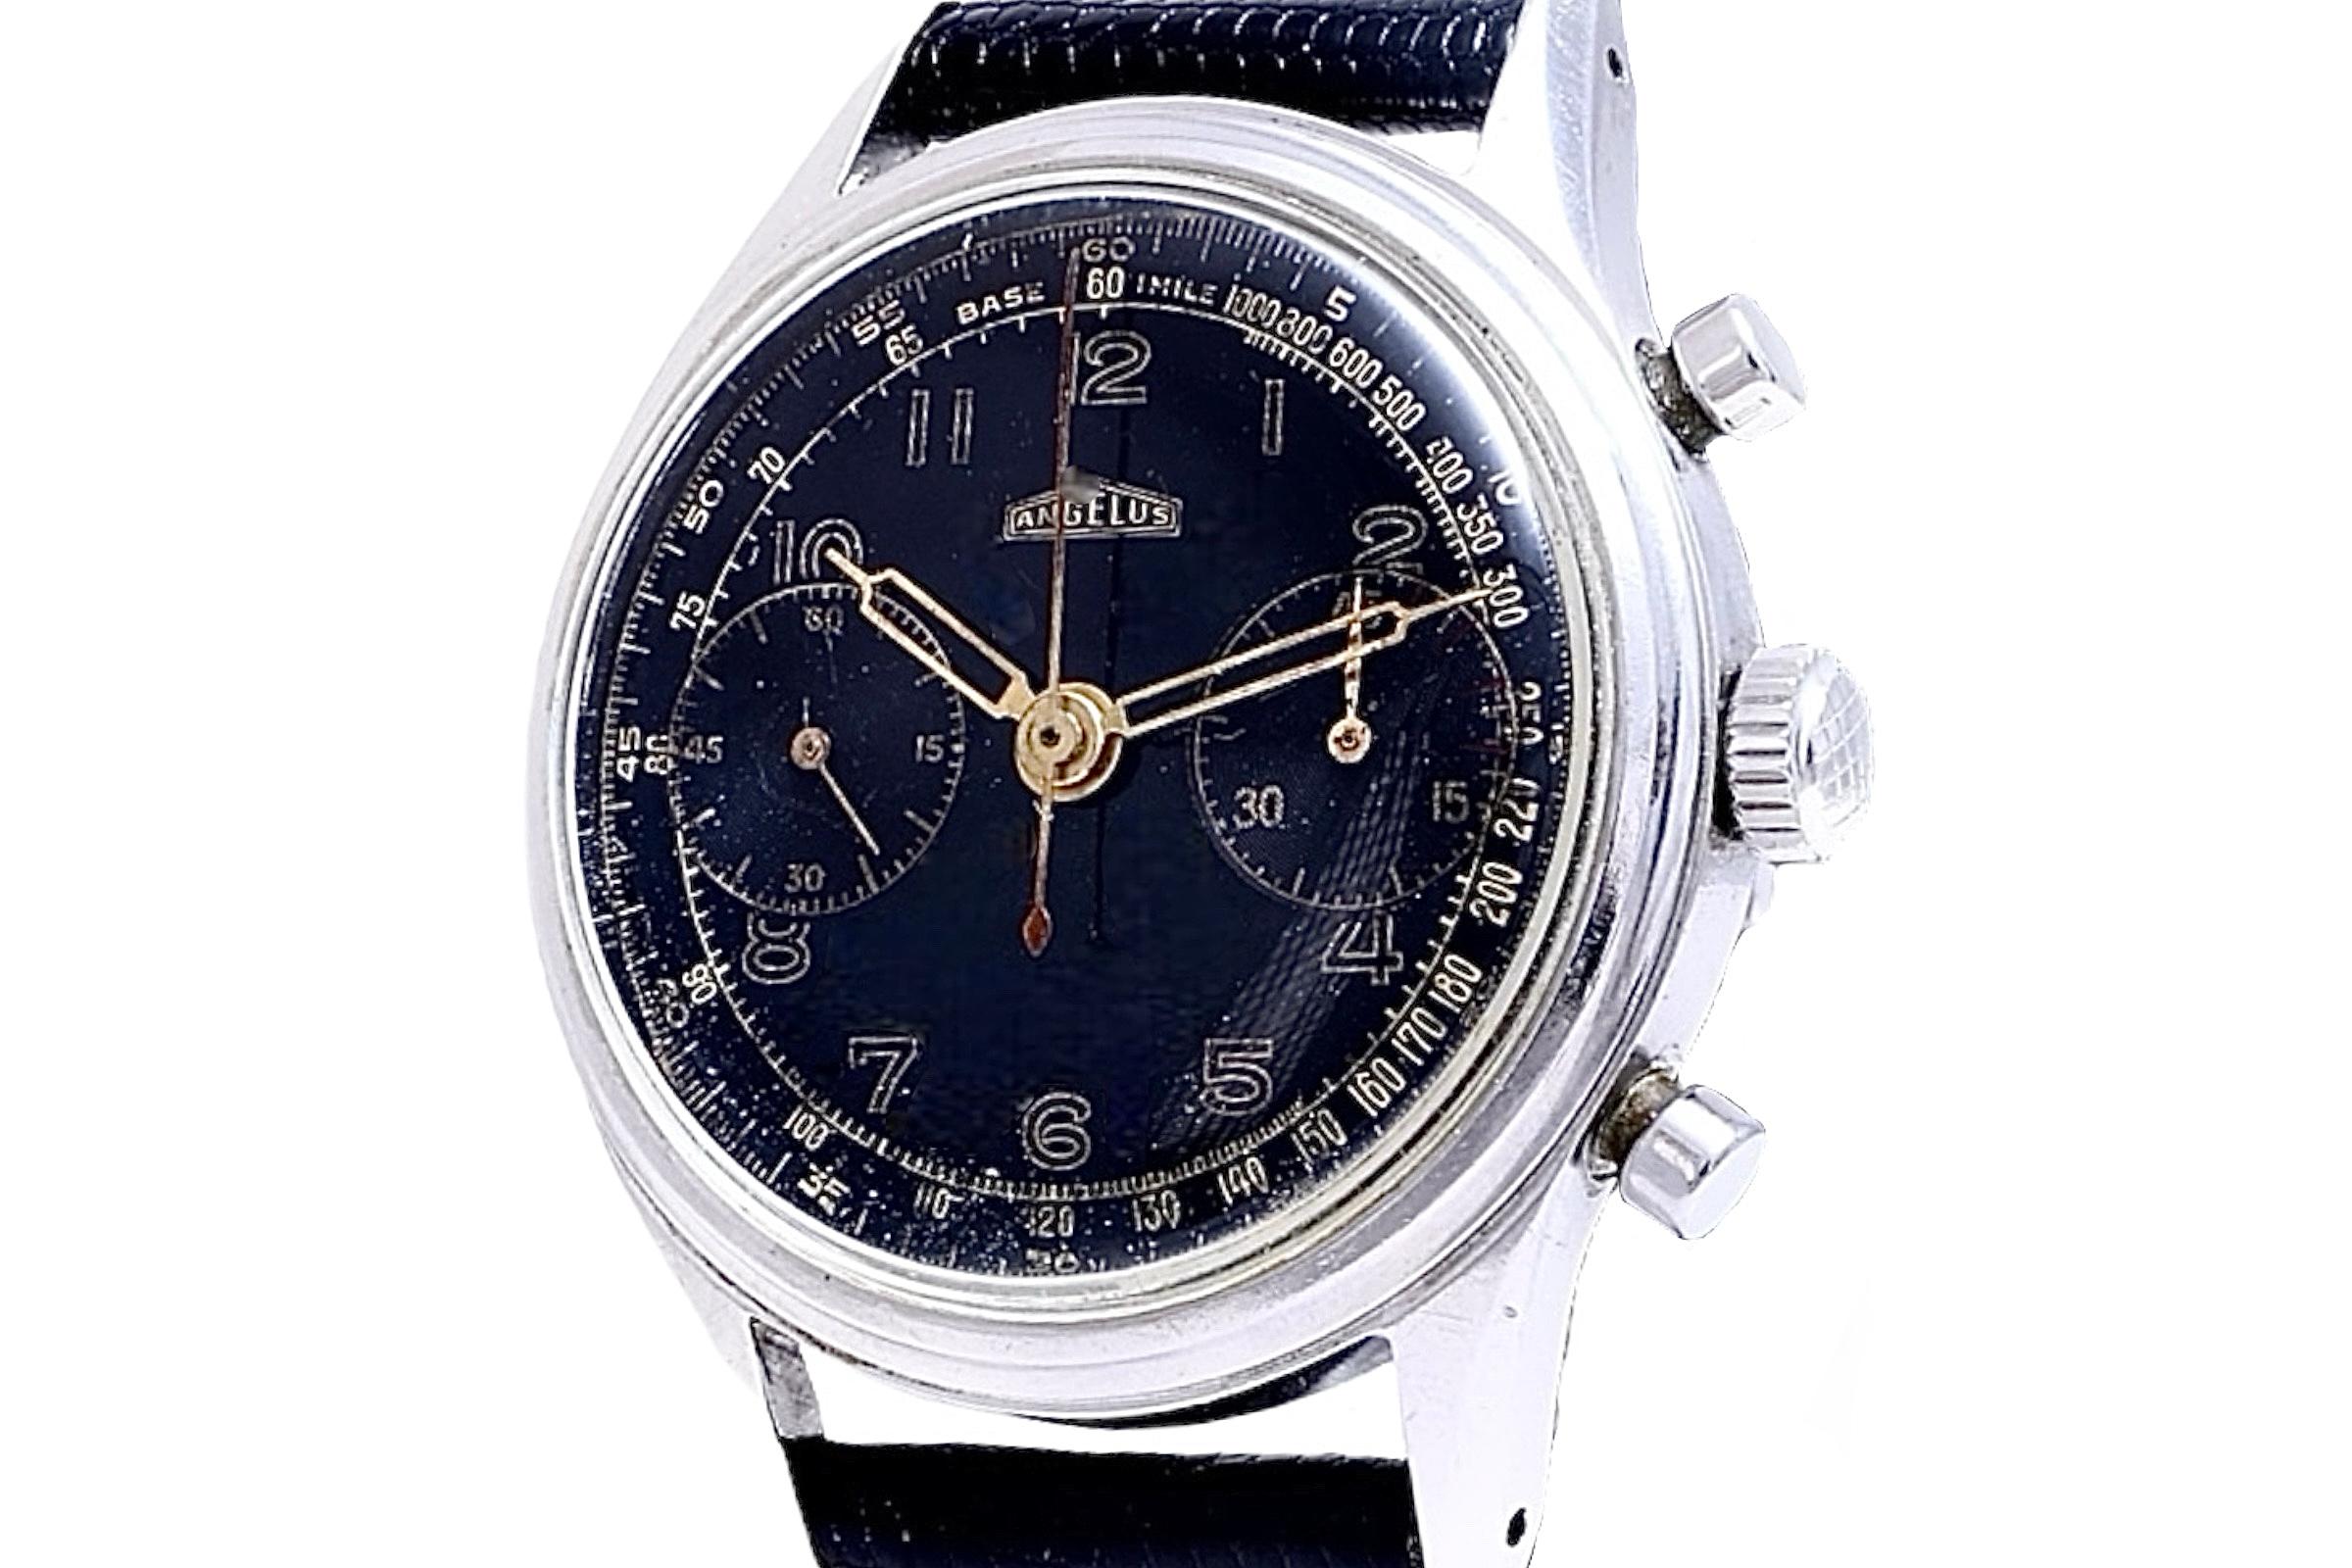 Steel Collectors Angelus Jumbo Chronograph Wrist Watch Gilt Dial